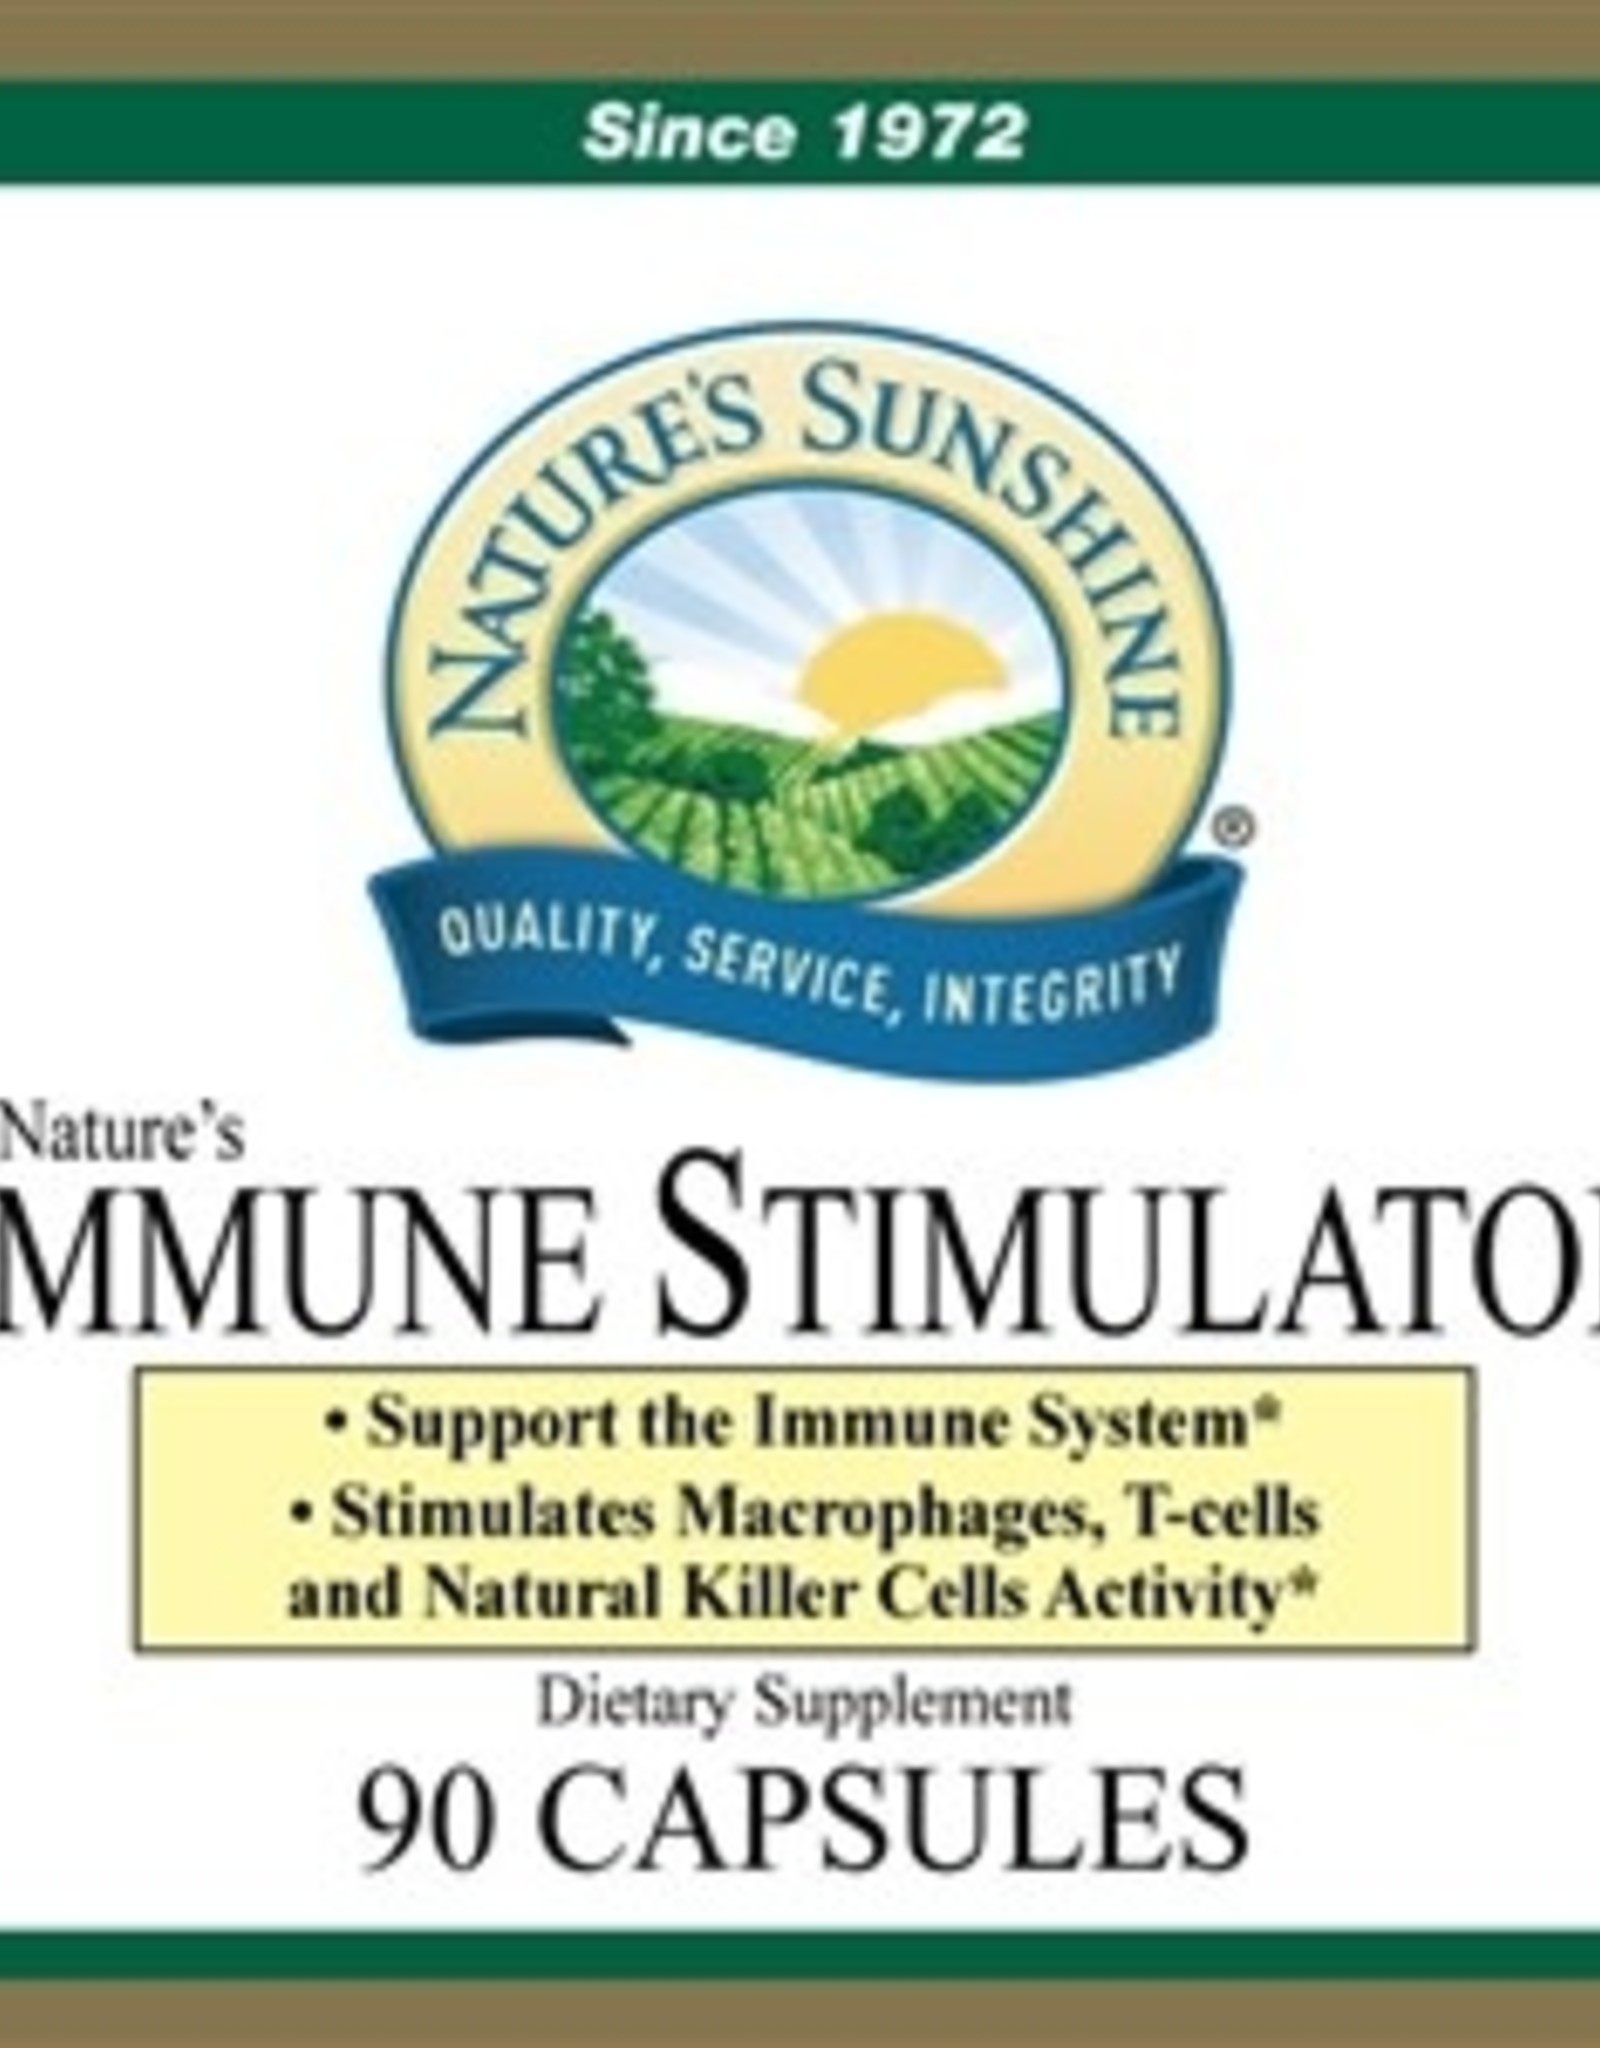 Nature's Sunshine Immune Stimulator(90 caps)*